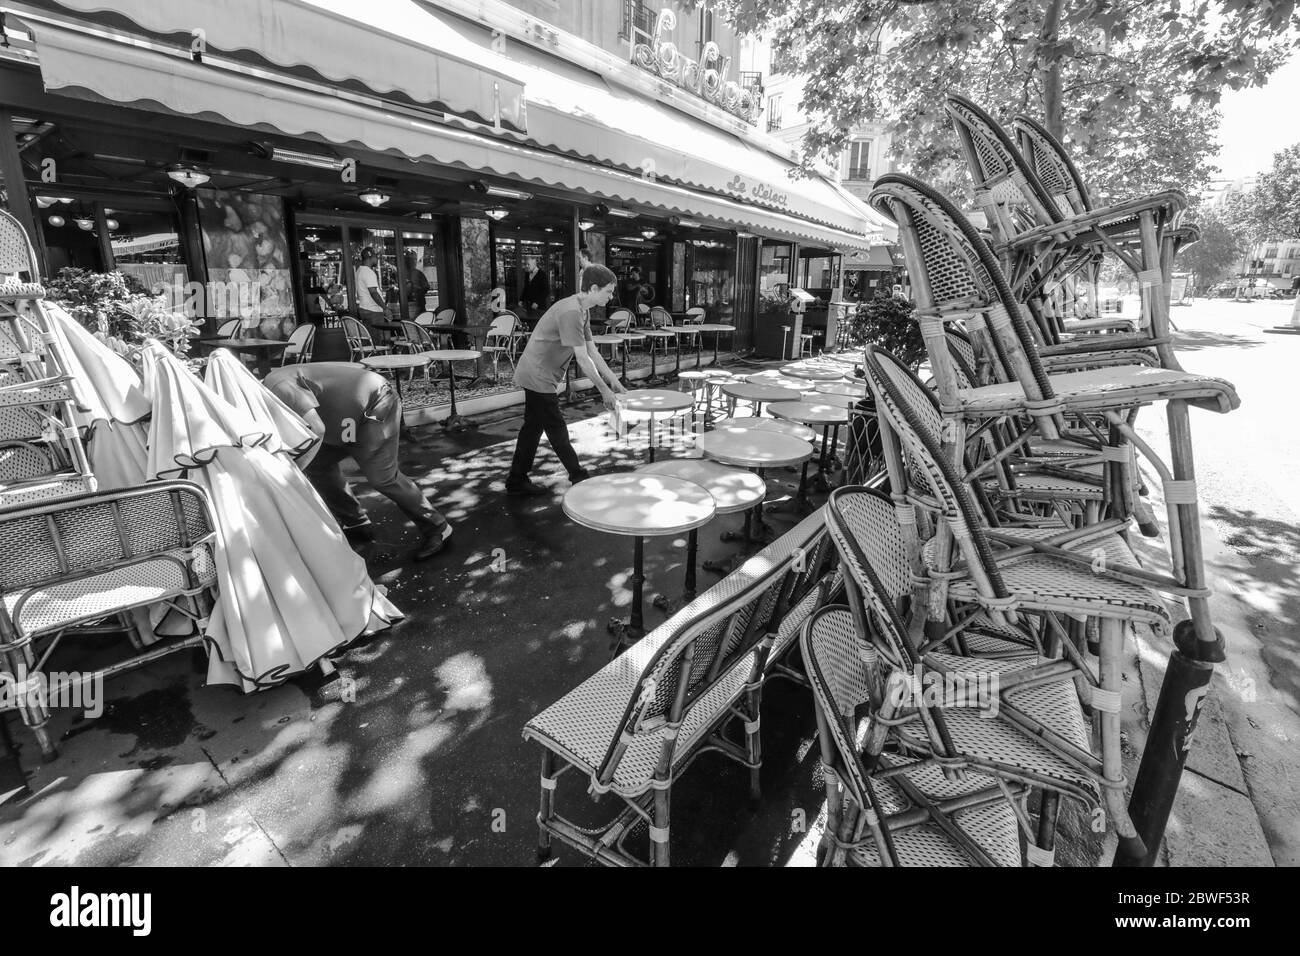 BRASSERIE LE SELECT REOPEN TOMORROW IN MONTPARNASSE PARIS Stock Photo